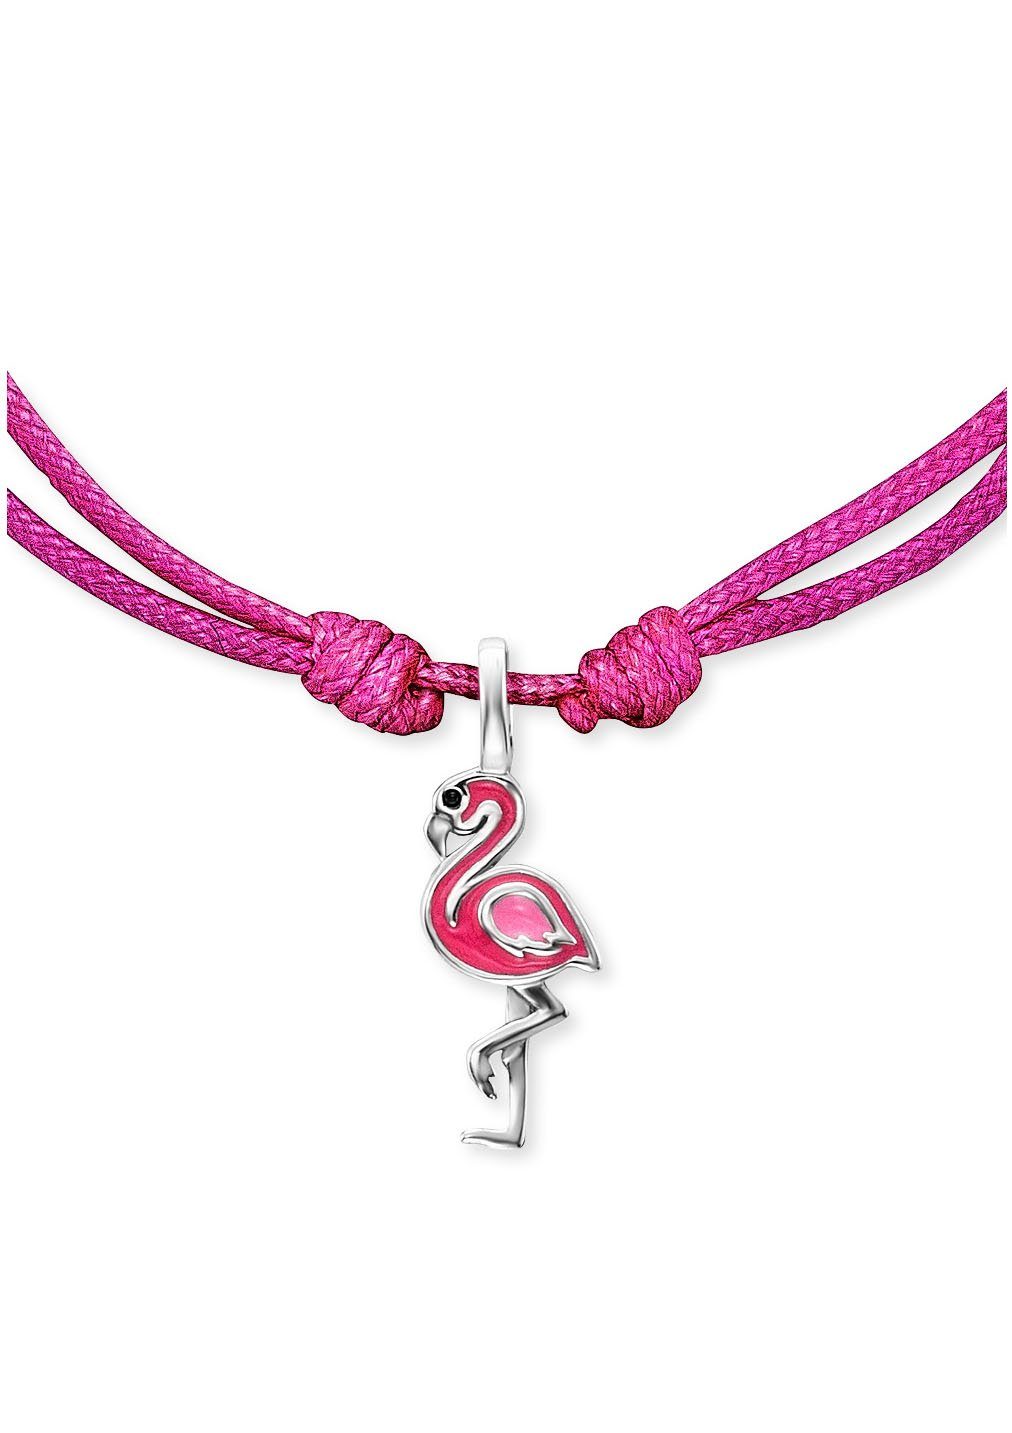 Herzengel Armband Emaille HEB-FLAMINGO, mit Flamingo